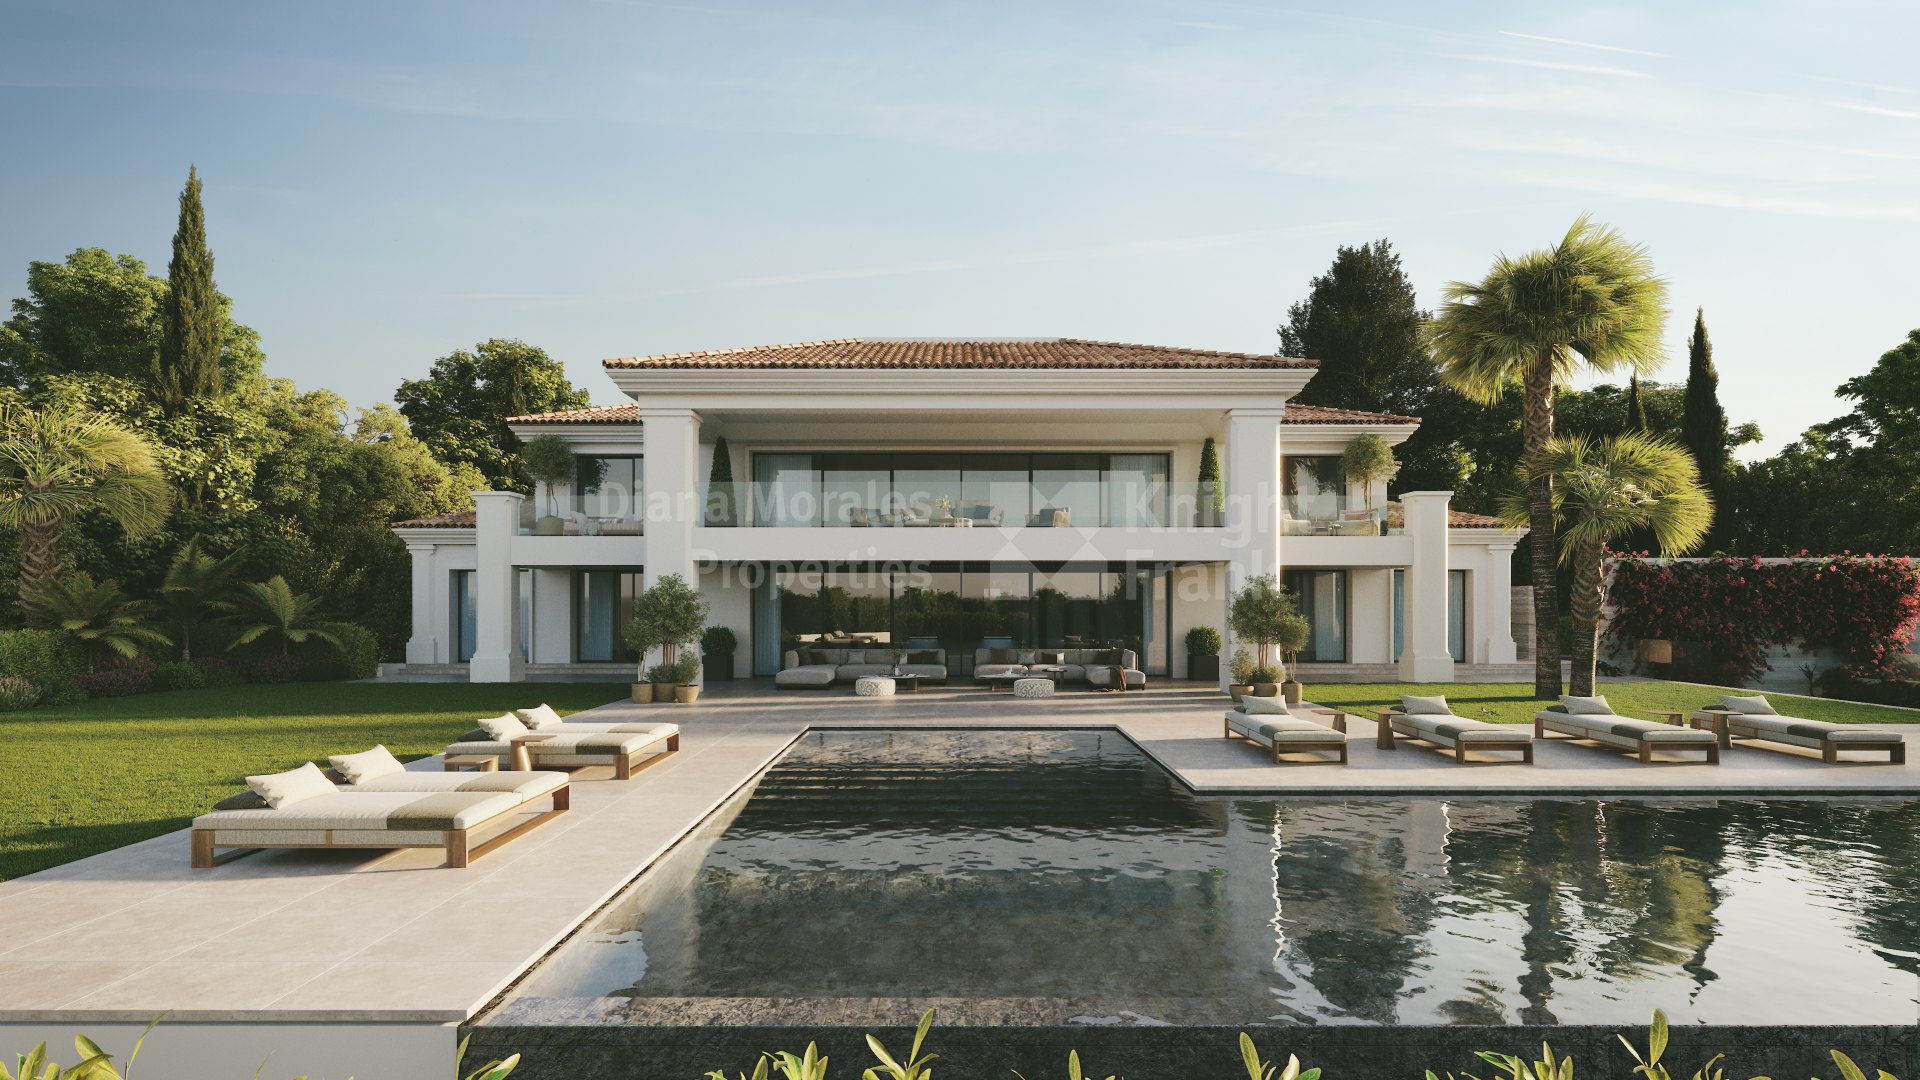 La Quinta, Coming soon: Villa HG. The Hidden Gem of the Golf Valley